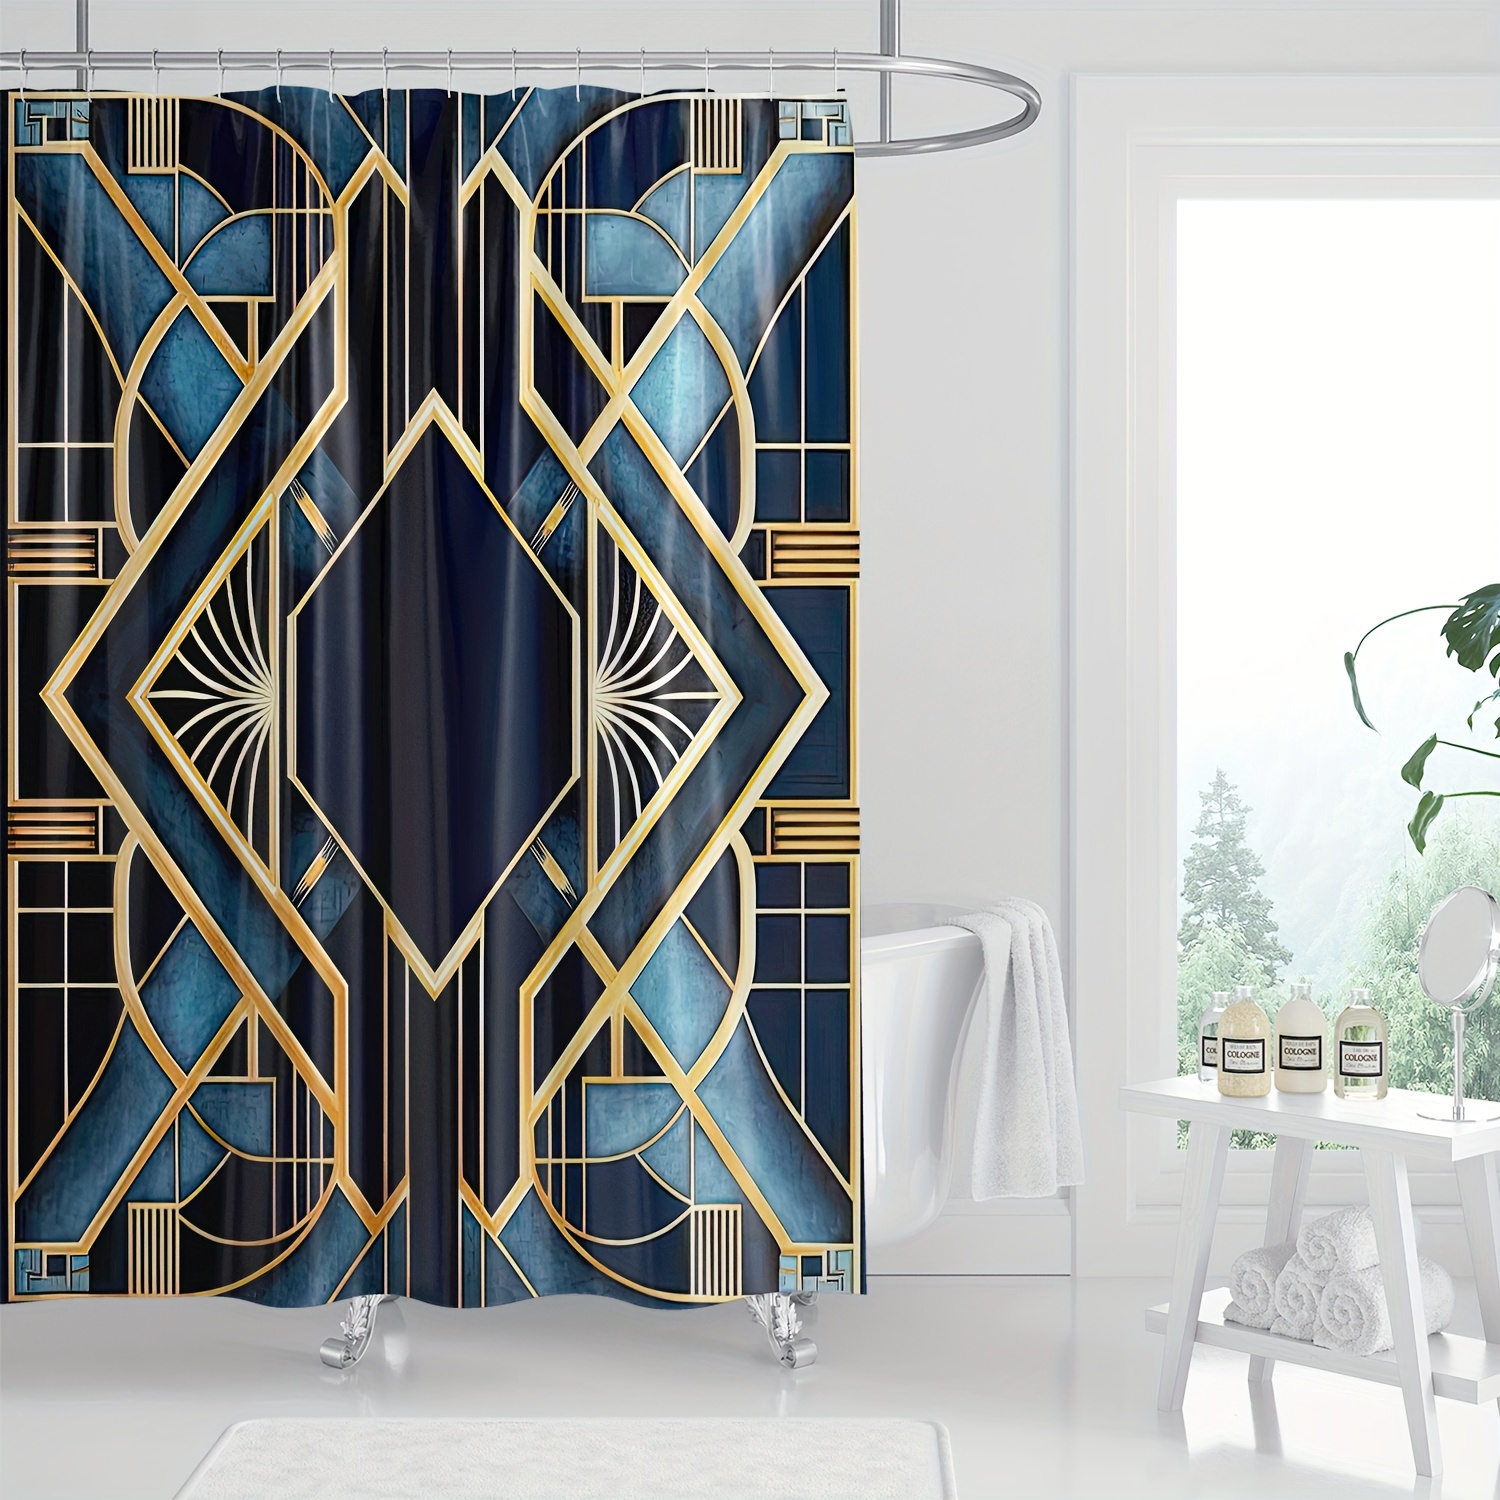 

1pc, Art Deco Shower Curtain, Blue And Gold Geometric Striped Grid Digital Print, Bathroom Decor, Home Decor, Machine Washable, Water-resistant Fabric